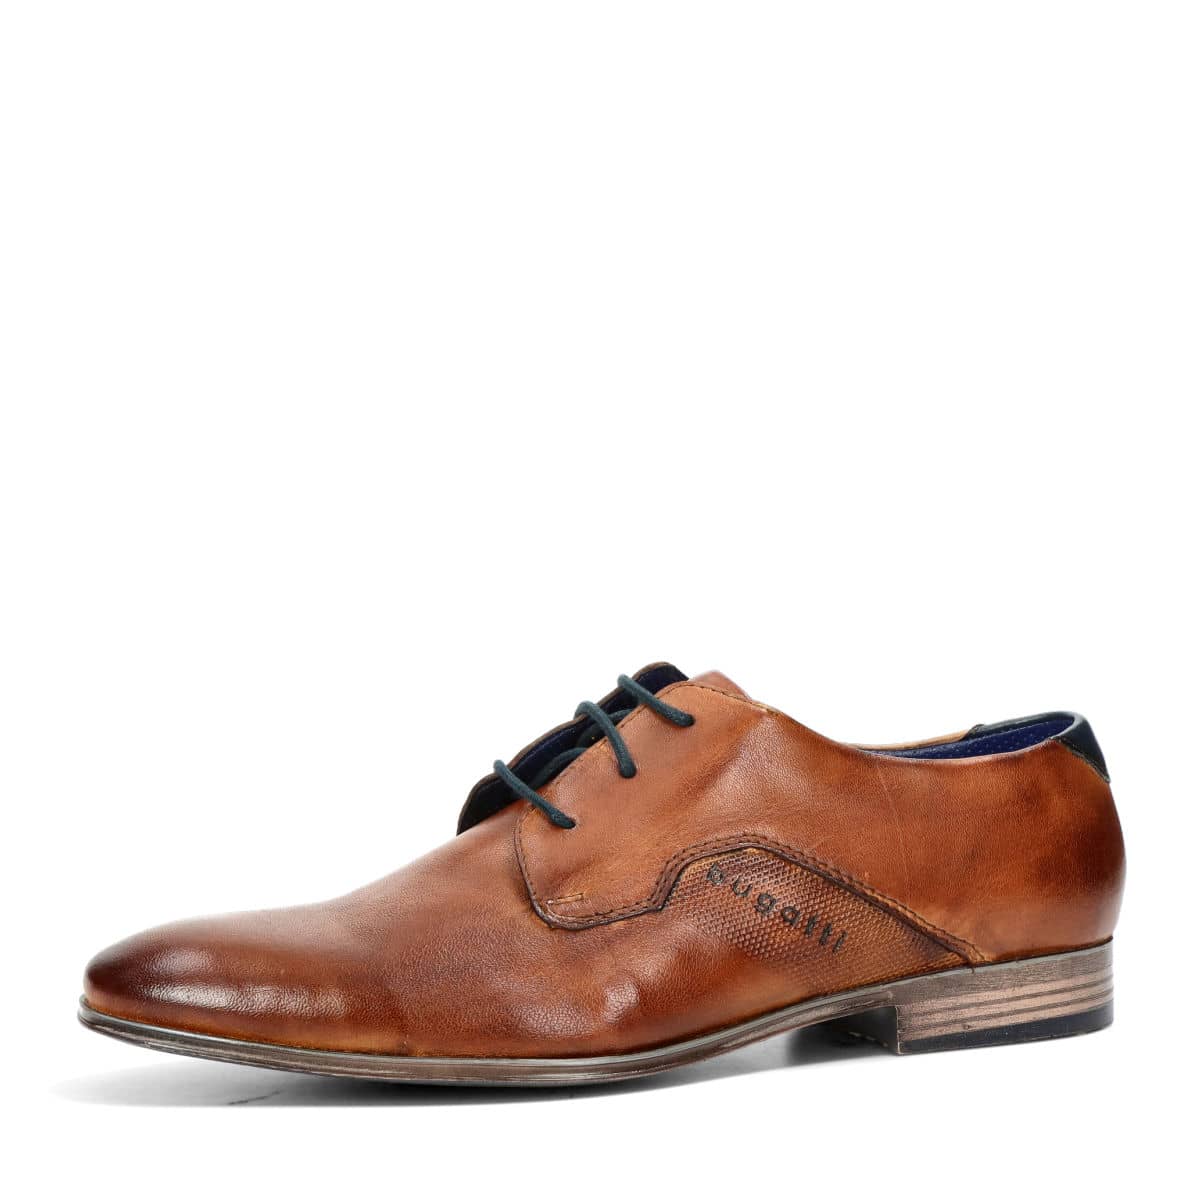 - shoes brown formal leather men\'s cognac Bugatti